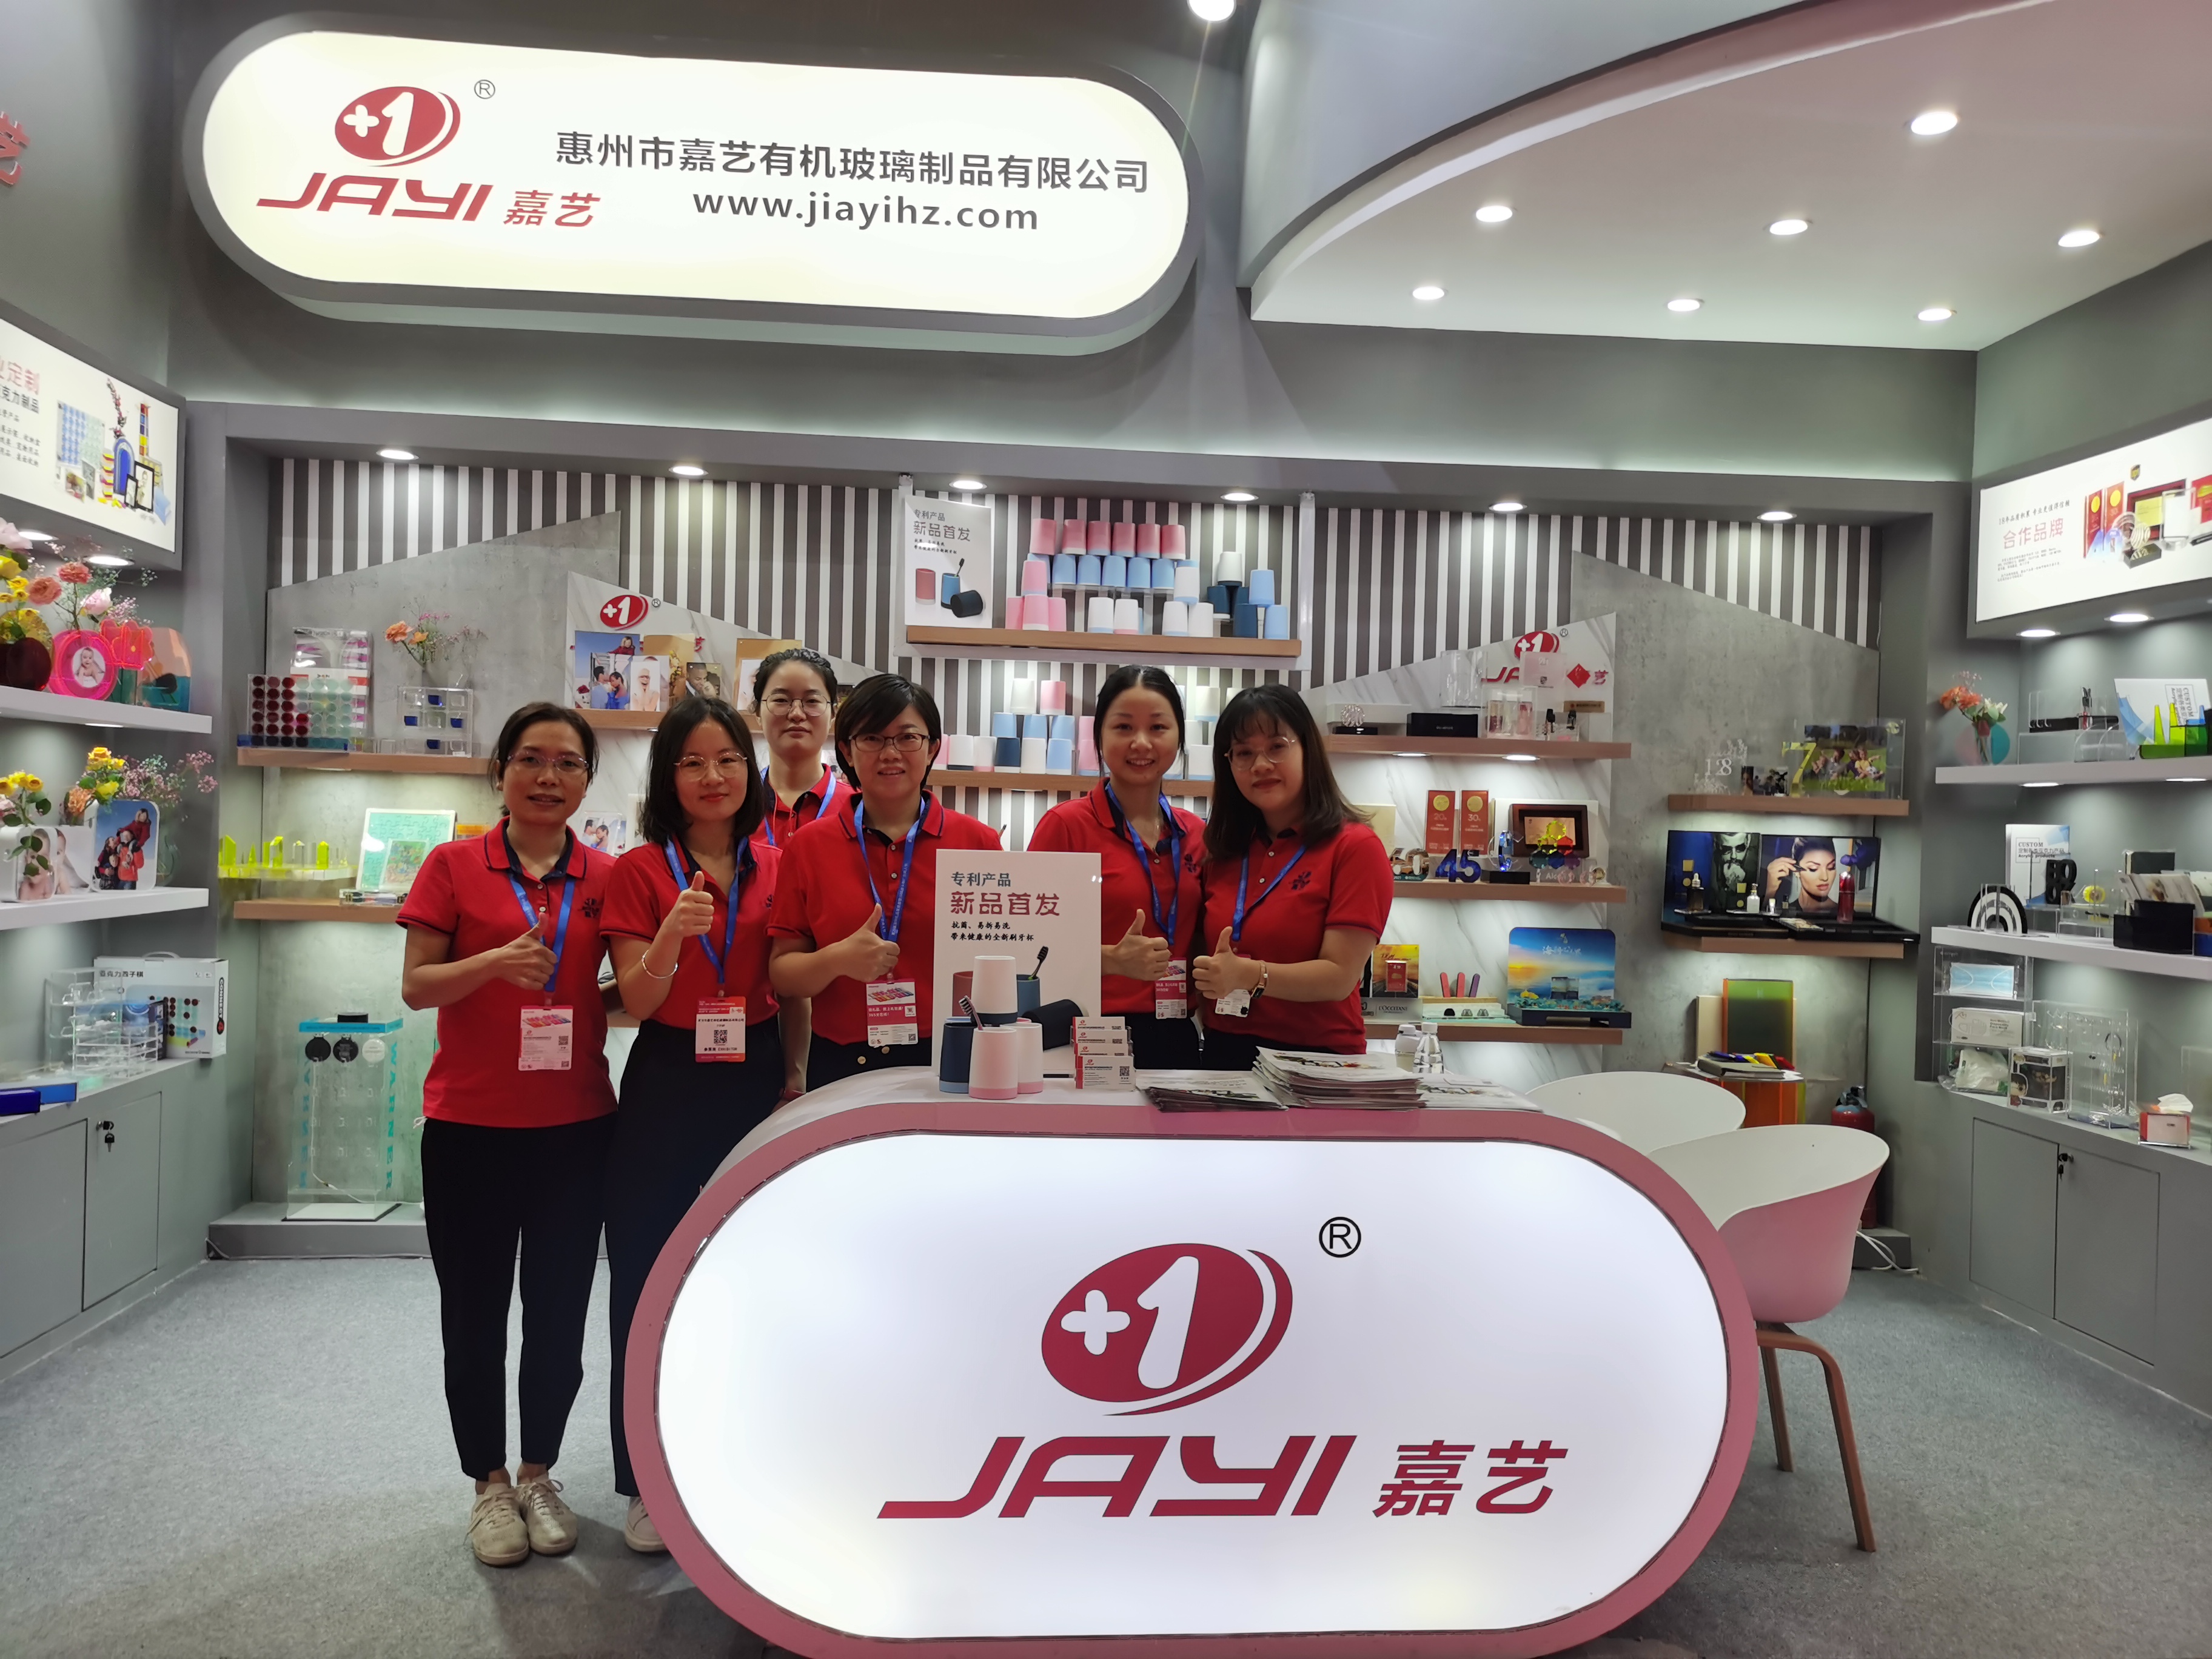 Isimemo: Shenzhen Gift & Home Fair